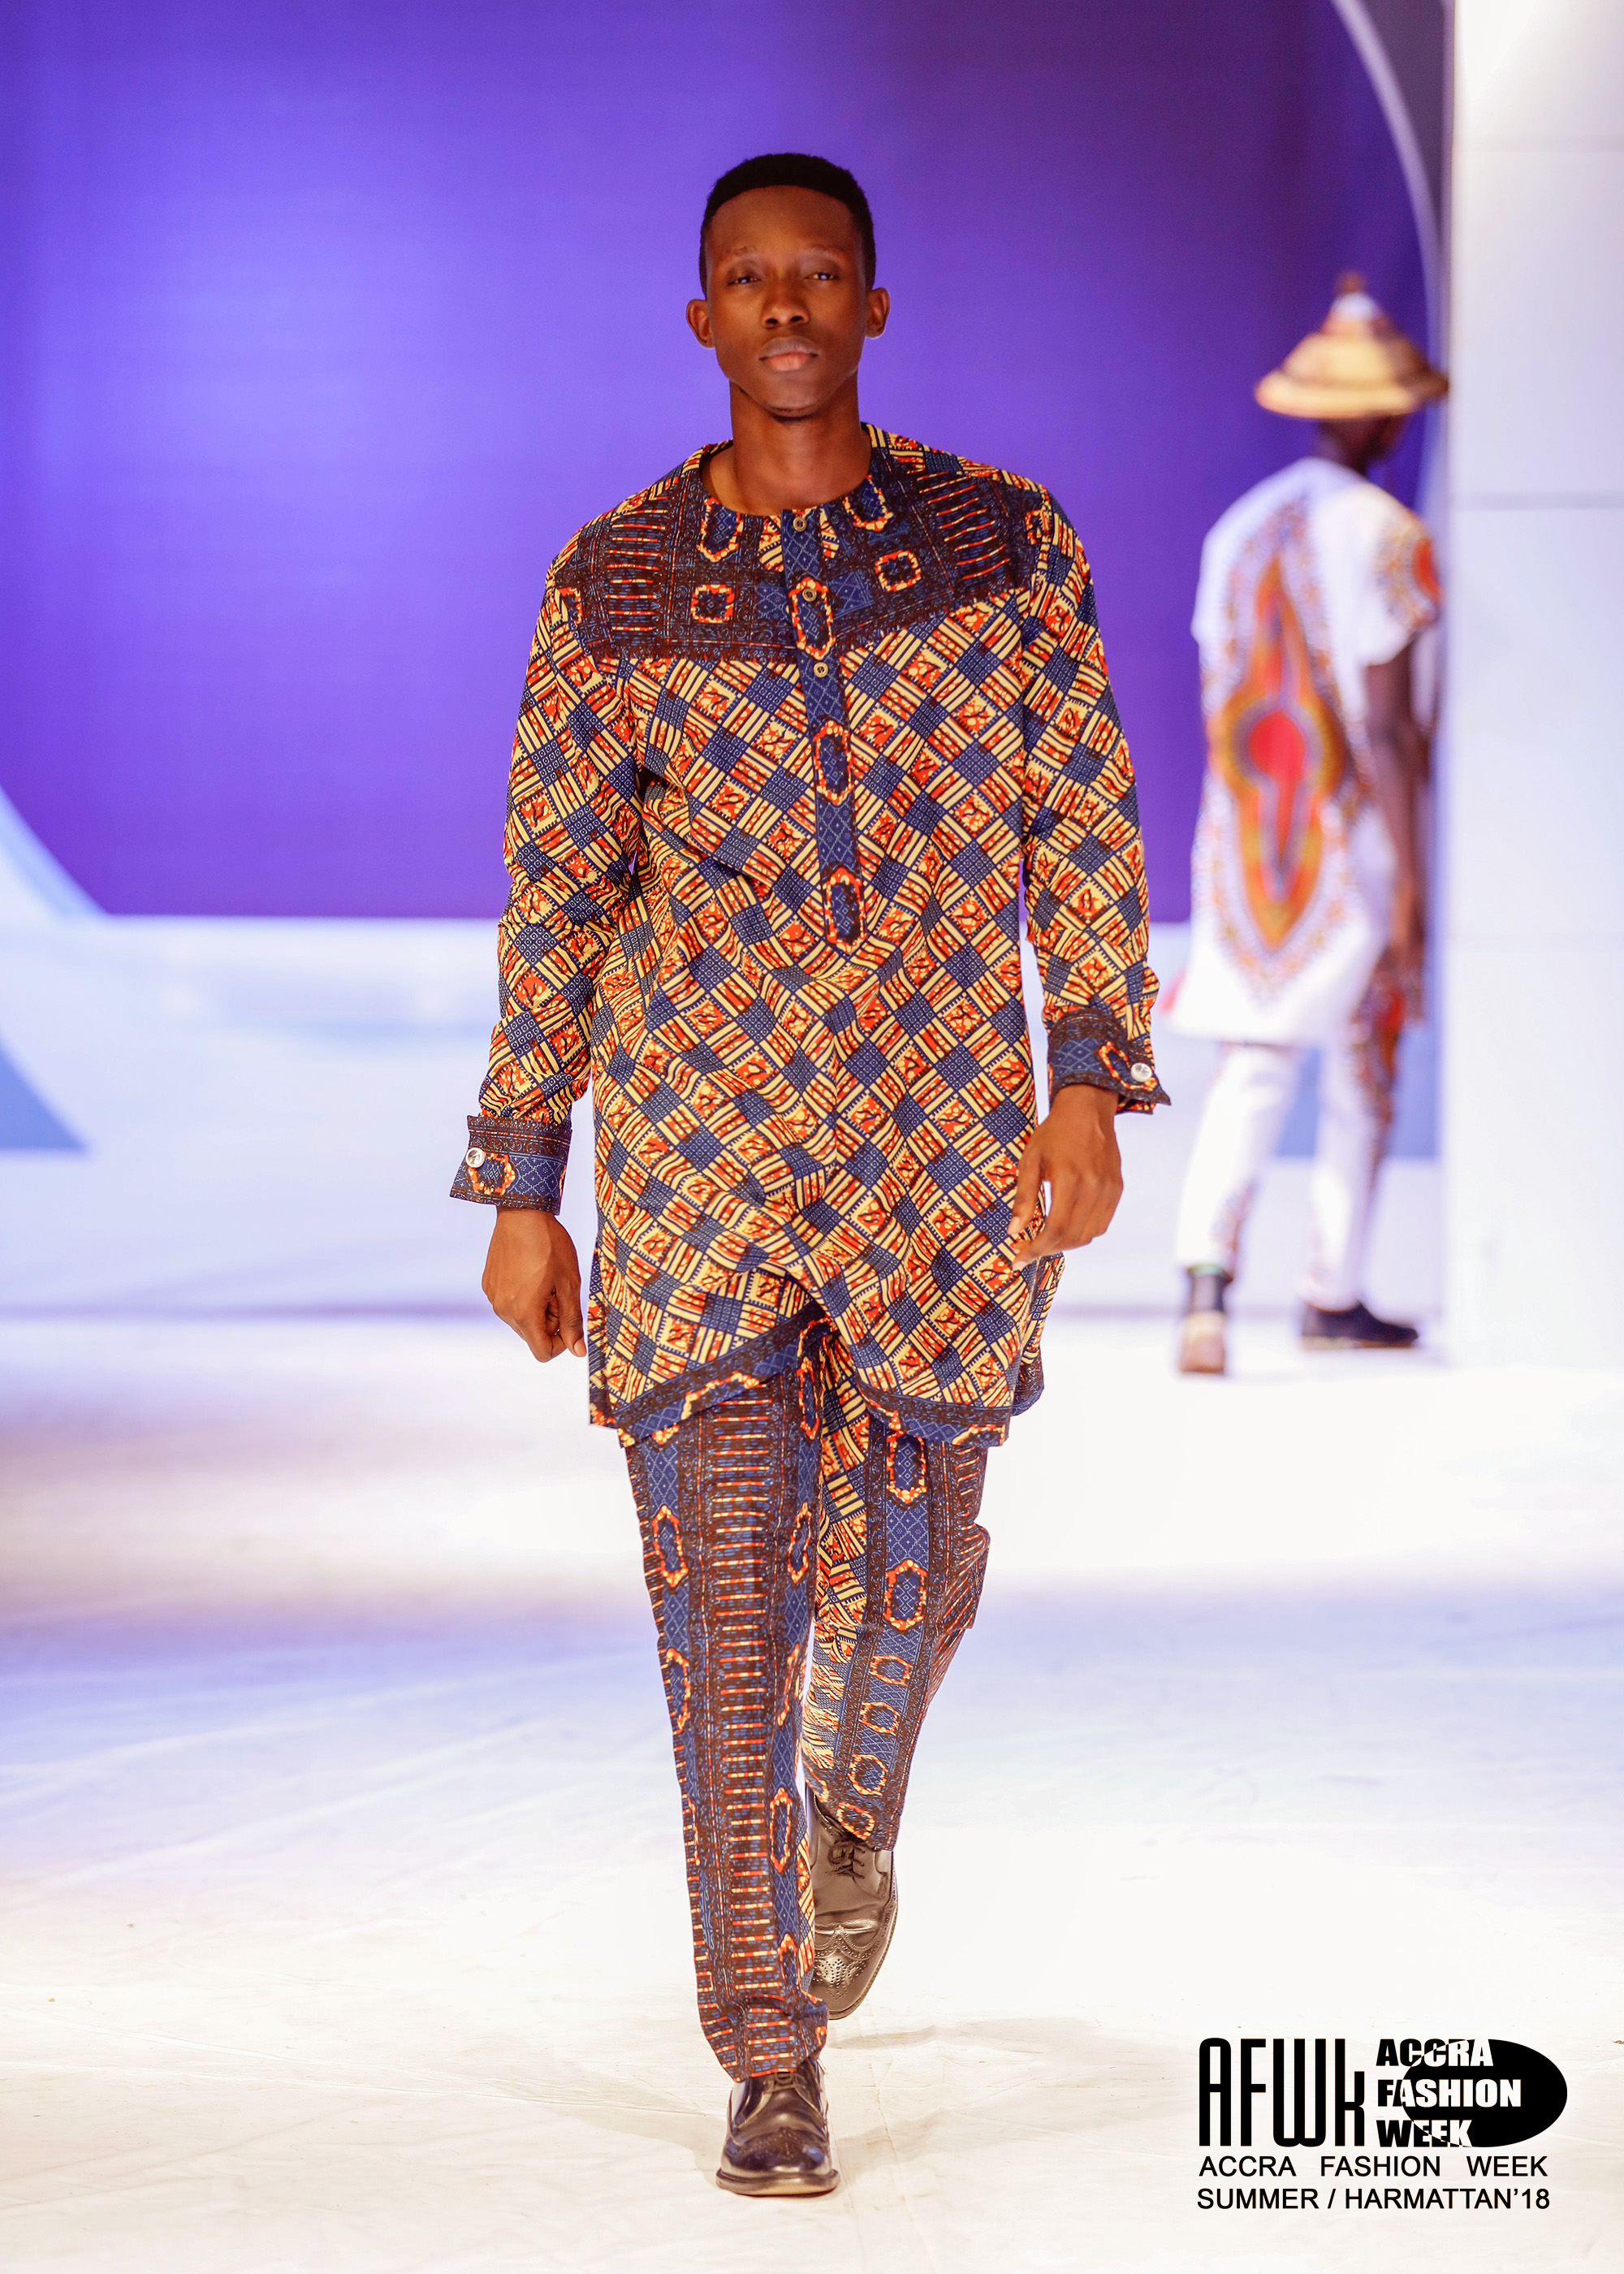 Abass (Ghana) @ Accra Fashion Week 2018 Summer / Harmattan - Accra ...